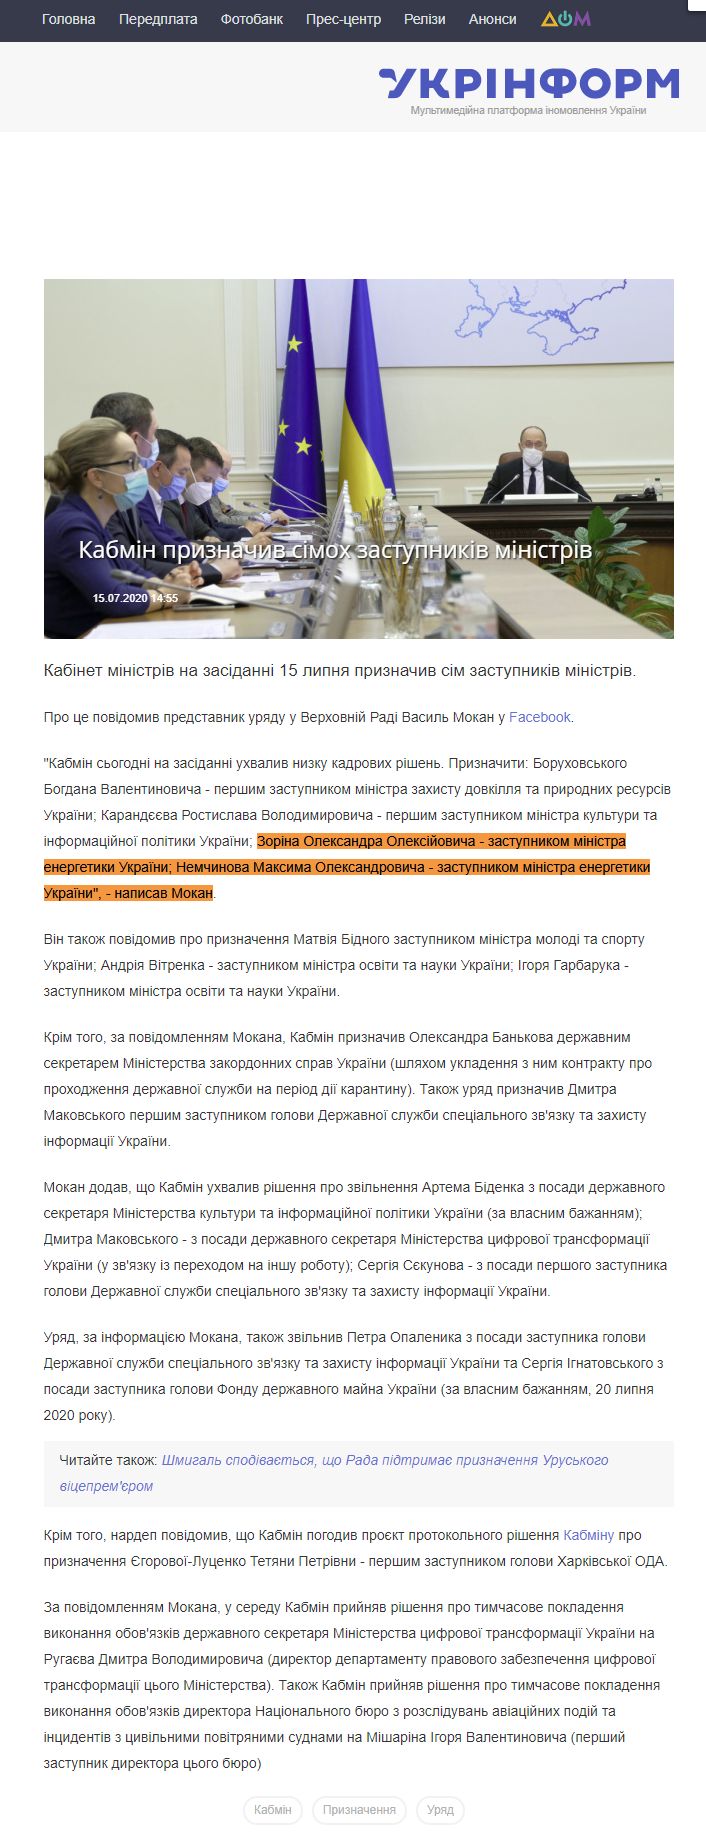 https://www.ukrinform.ua/rubric-polytics/3063487-kabmin-priznaciv-simoh-zastupnikiv-ministriv.html